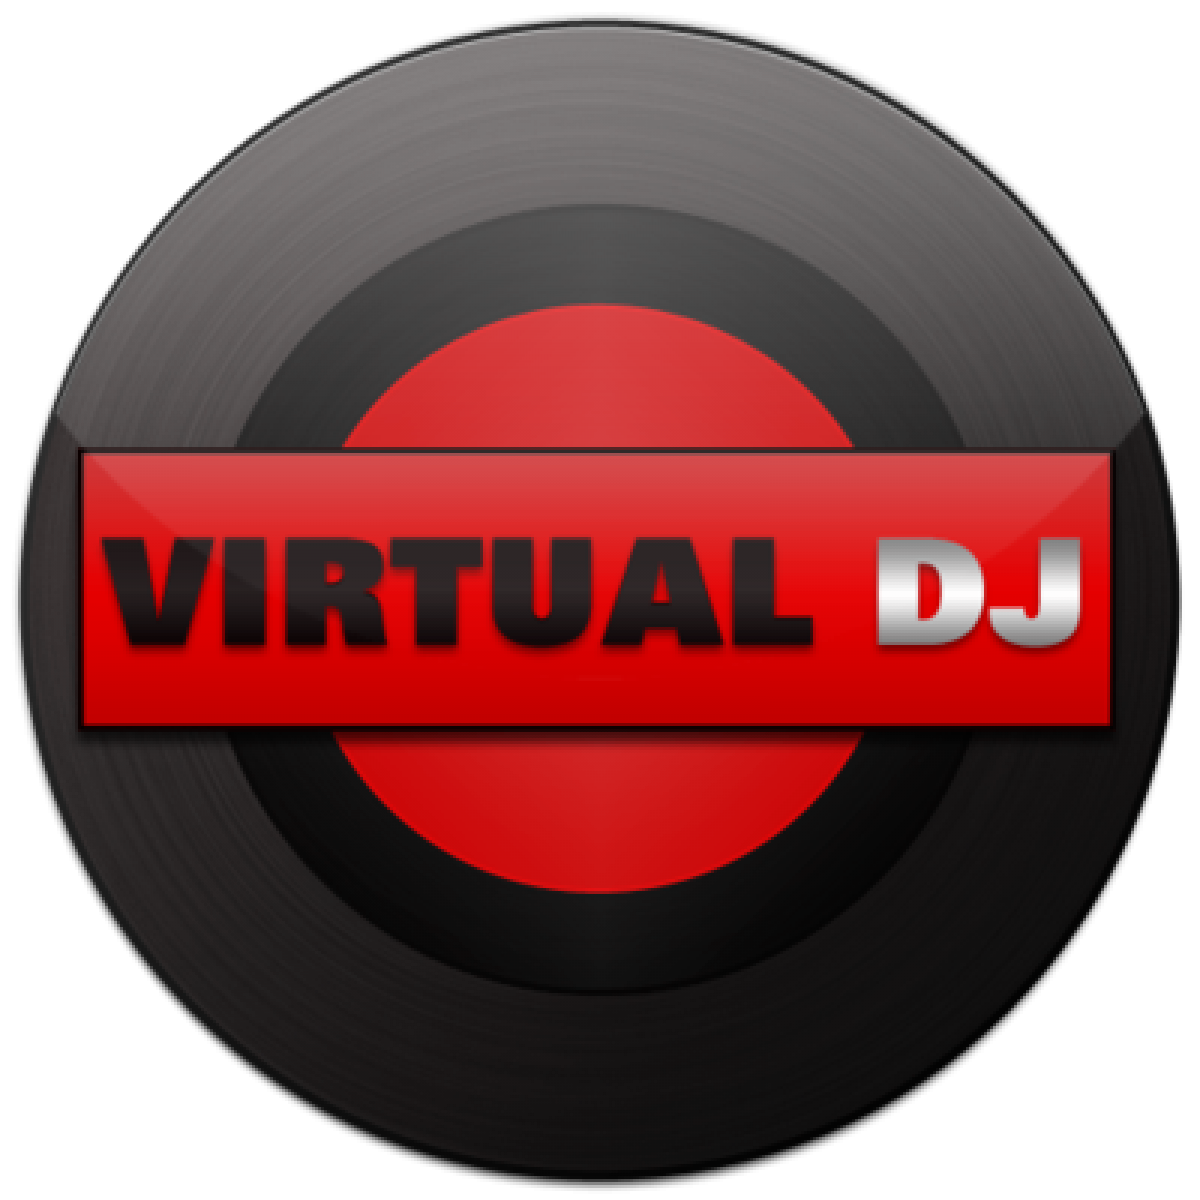 Virtual dj for pc windows 10